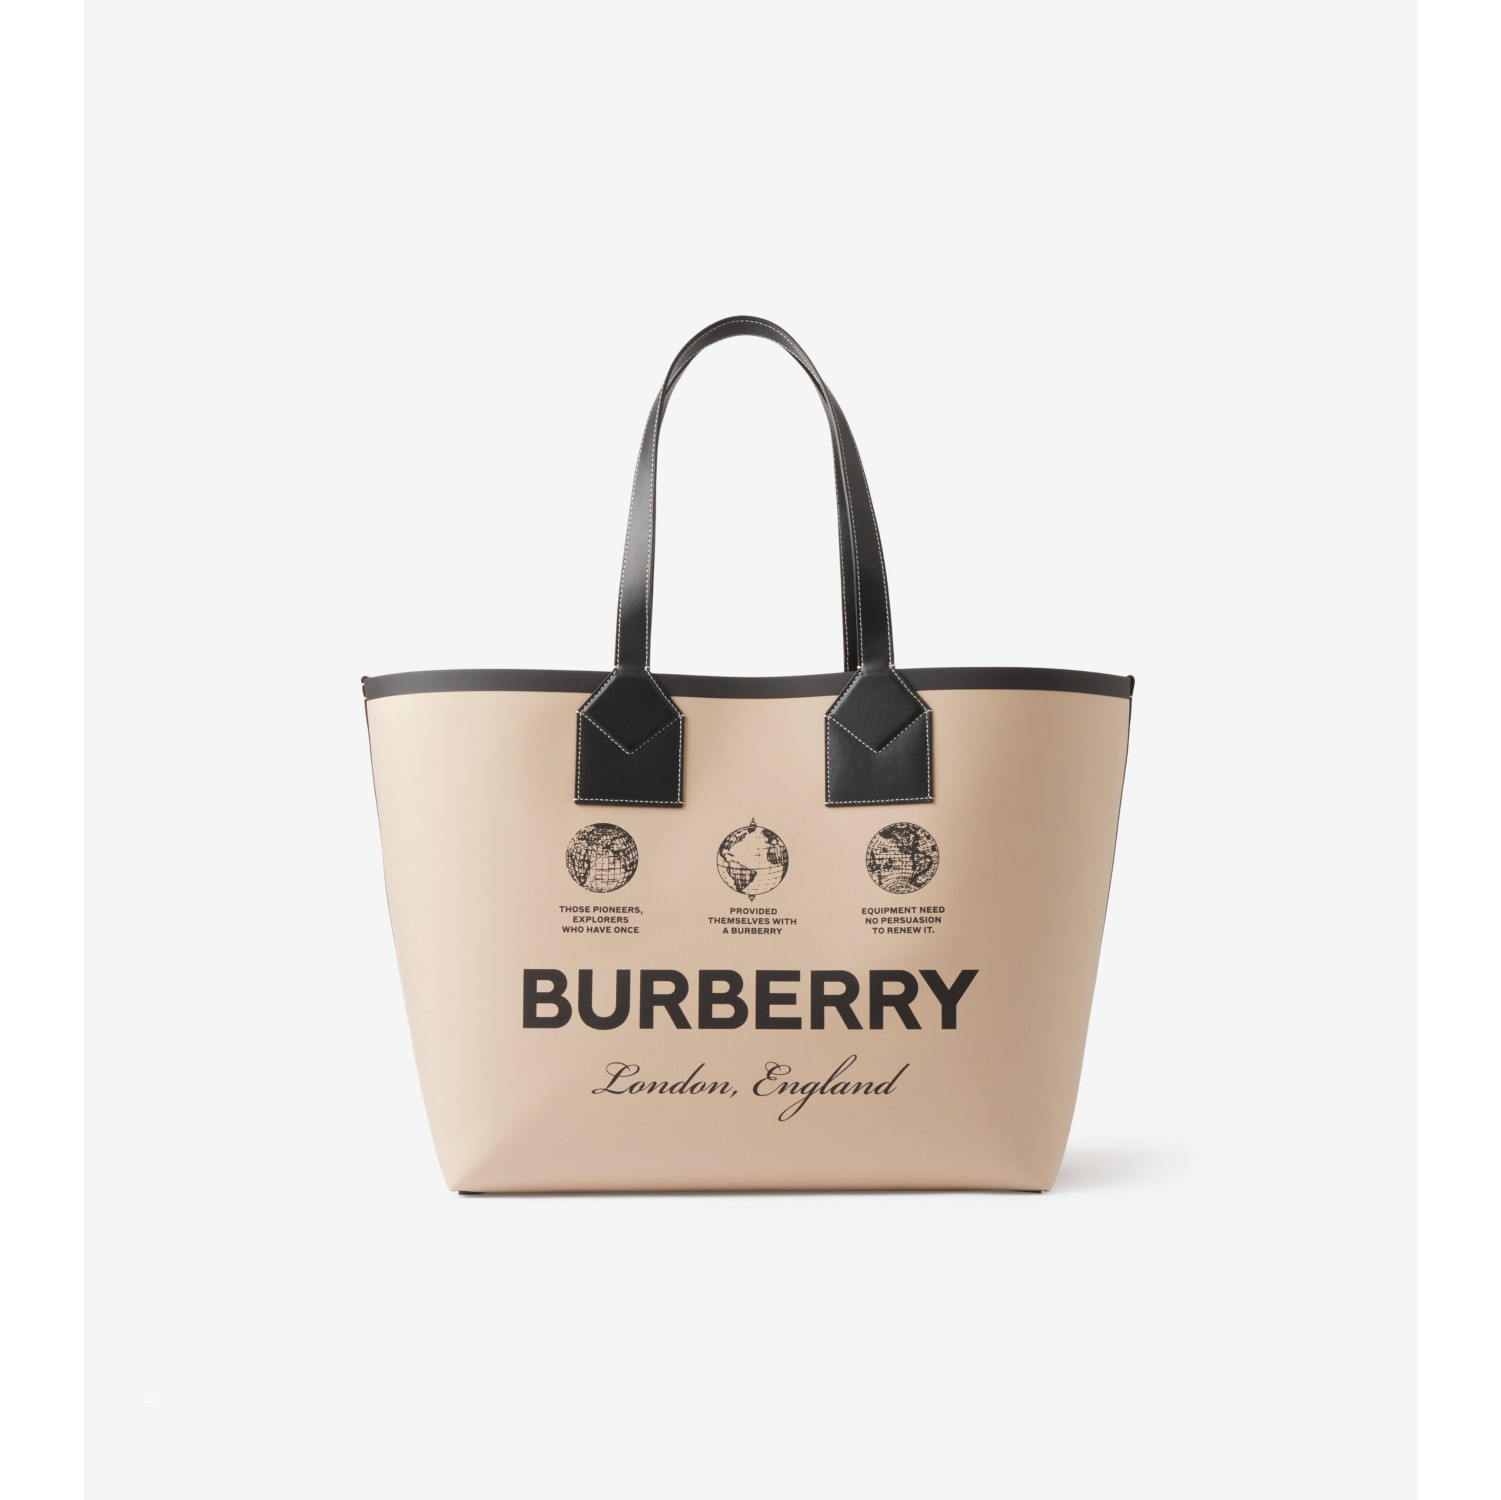 Burberry London Tote Bag